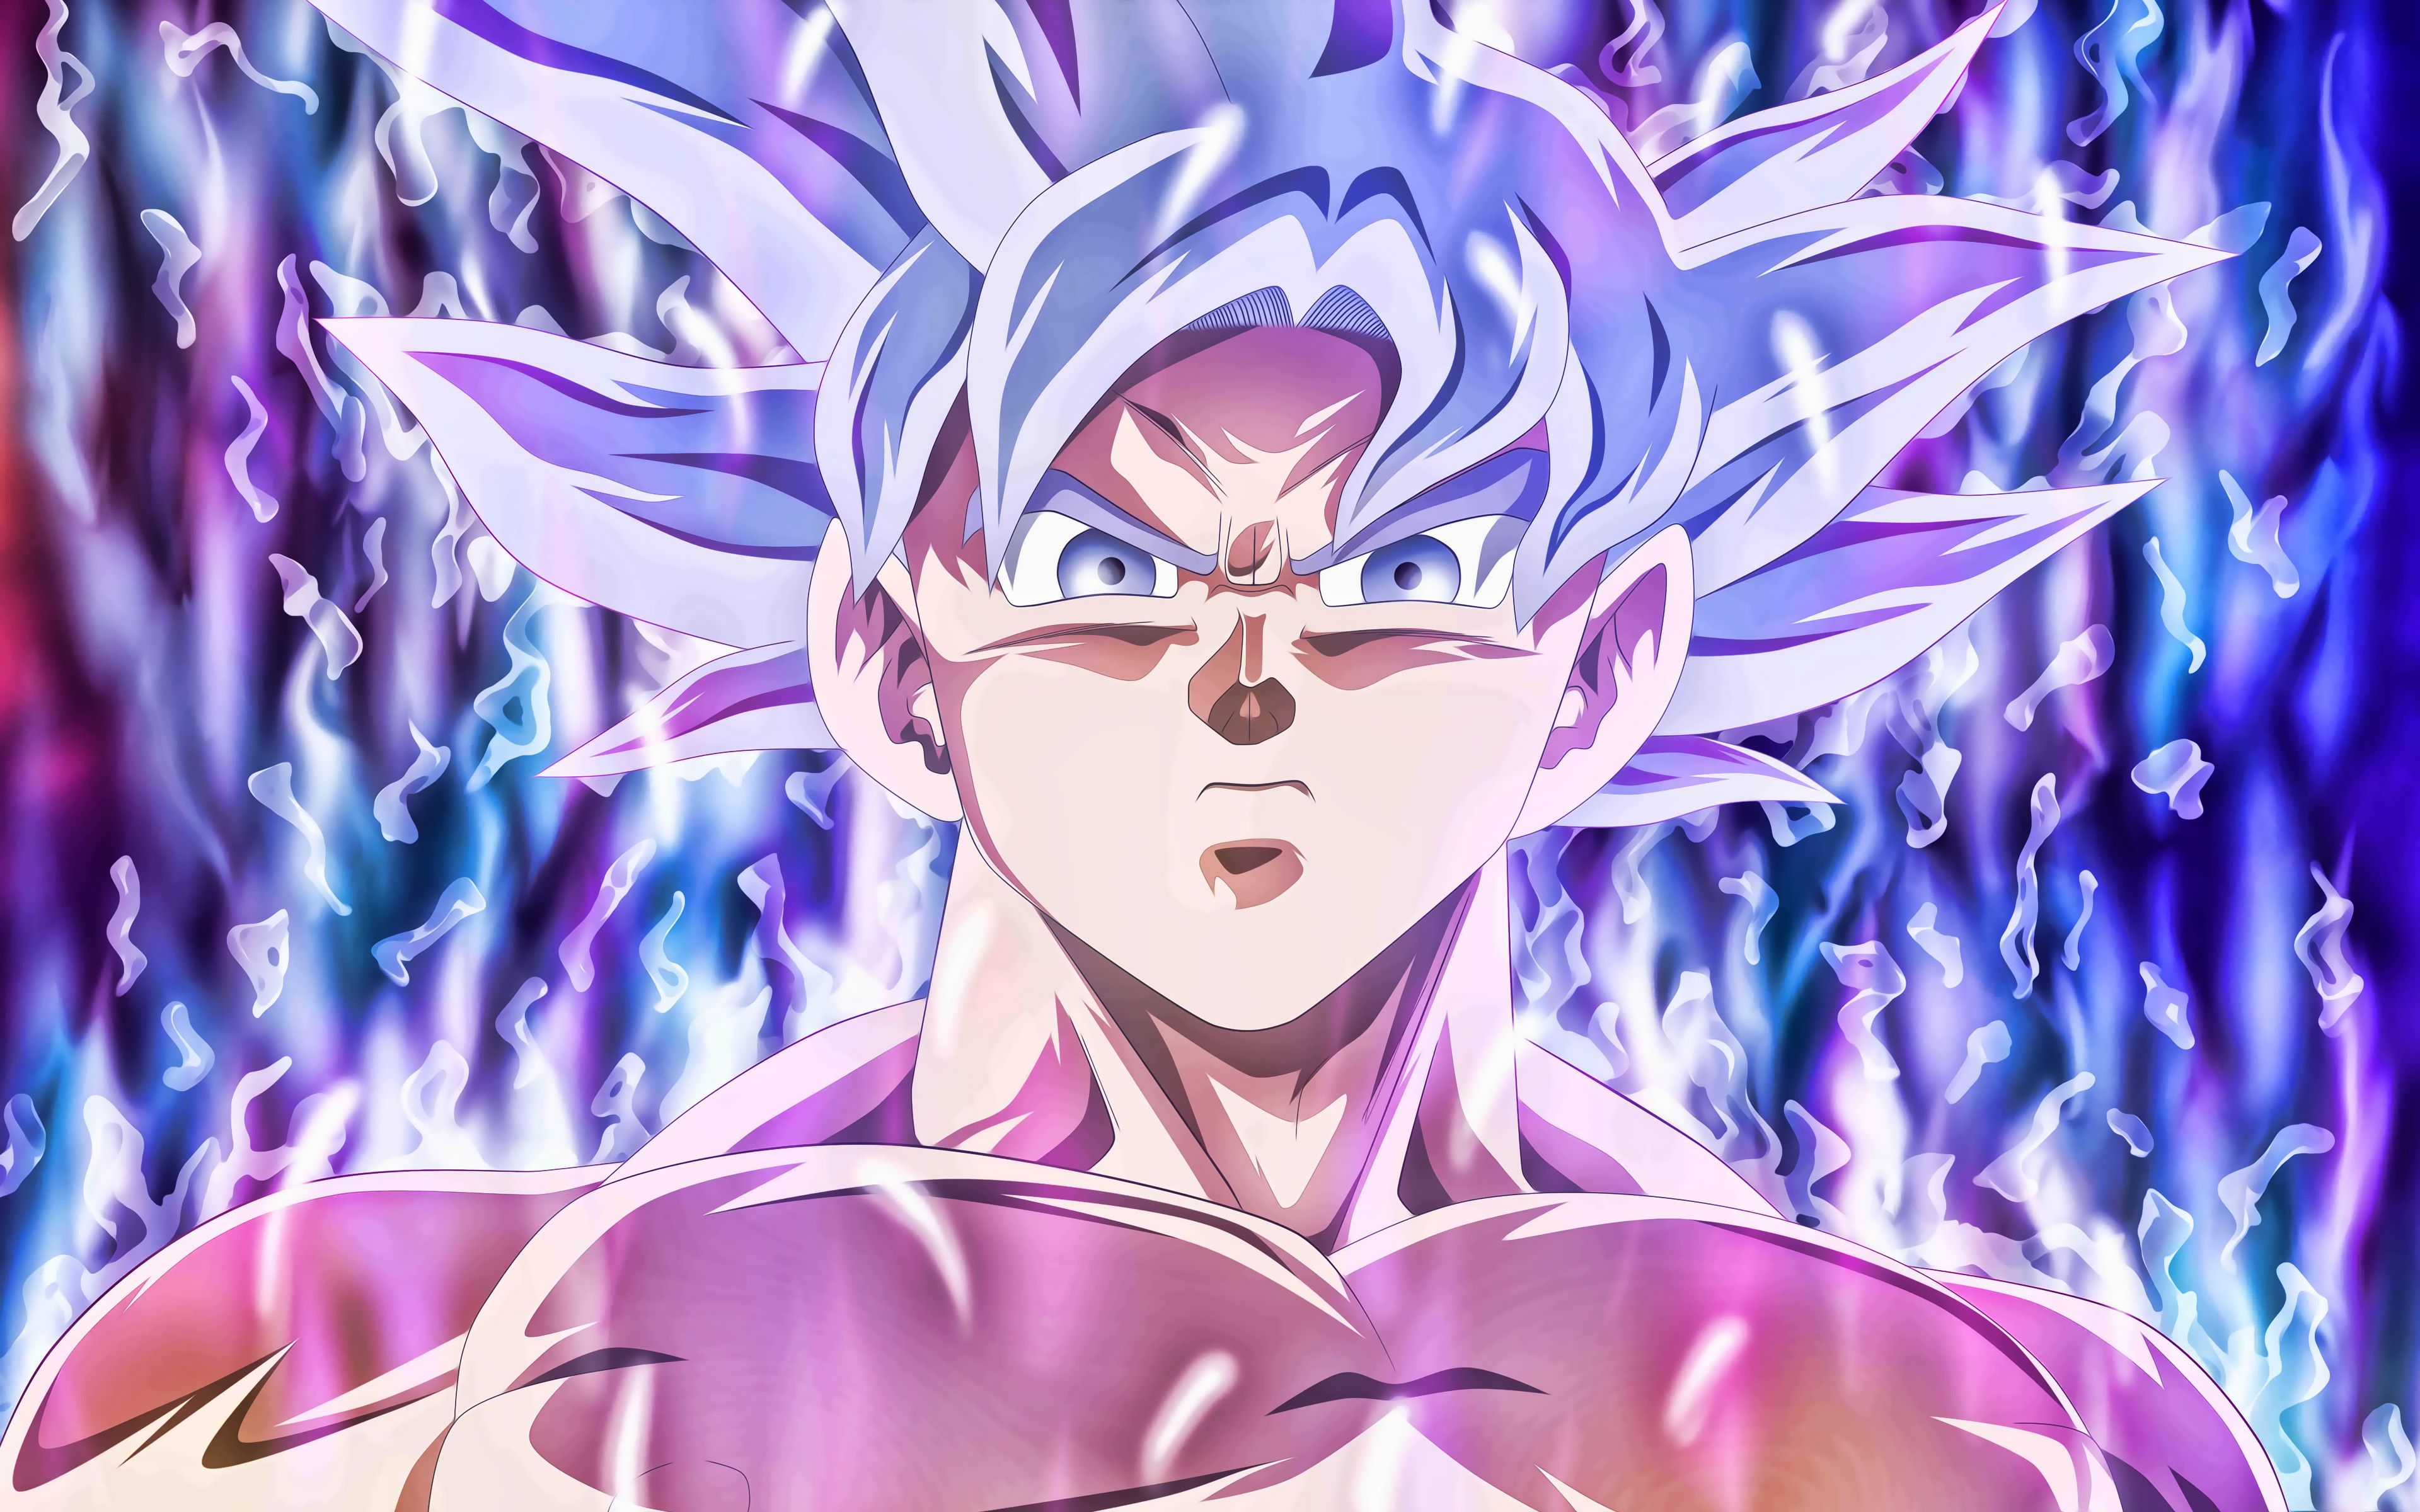 Download wallpapers 4k, Ultra Instinct Goku, violet fire, DBS characters, S...